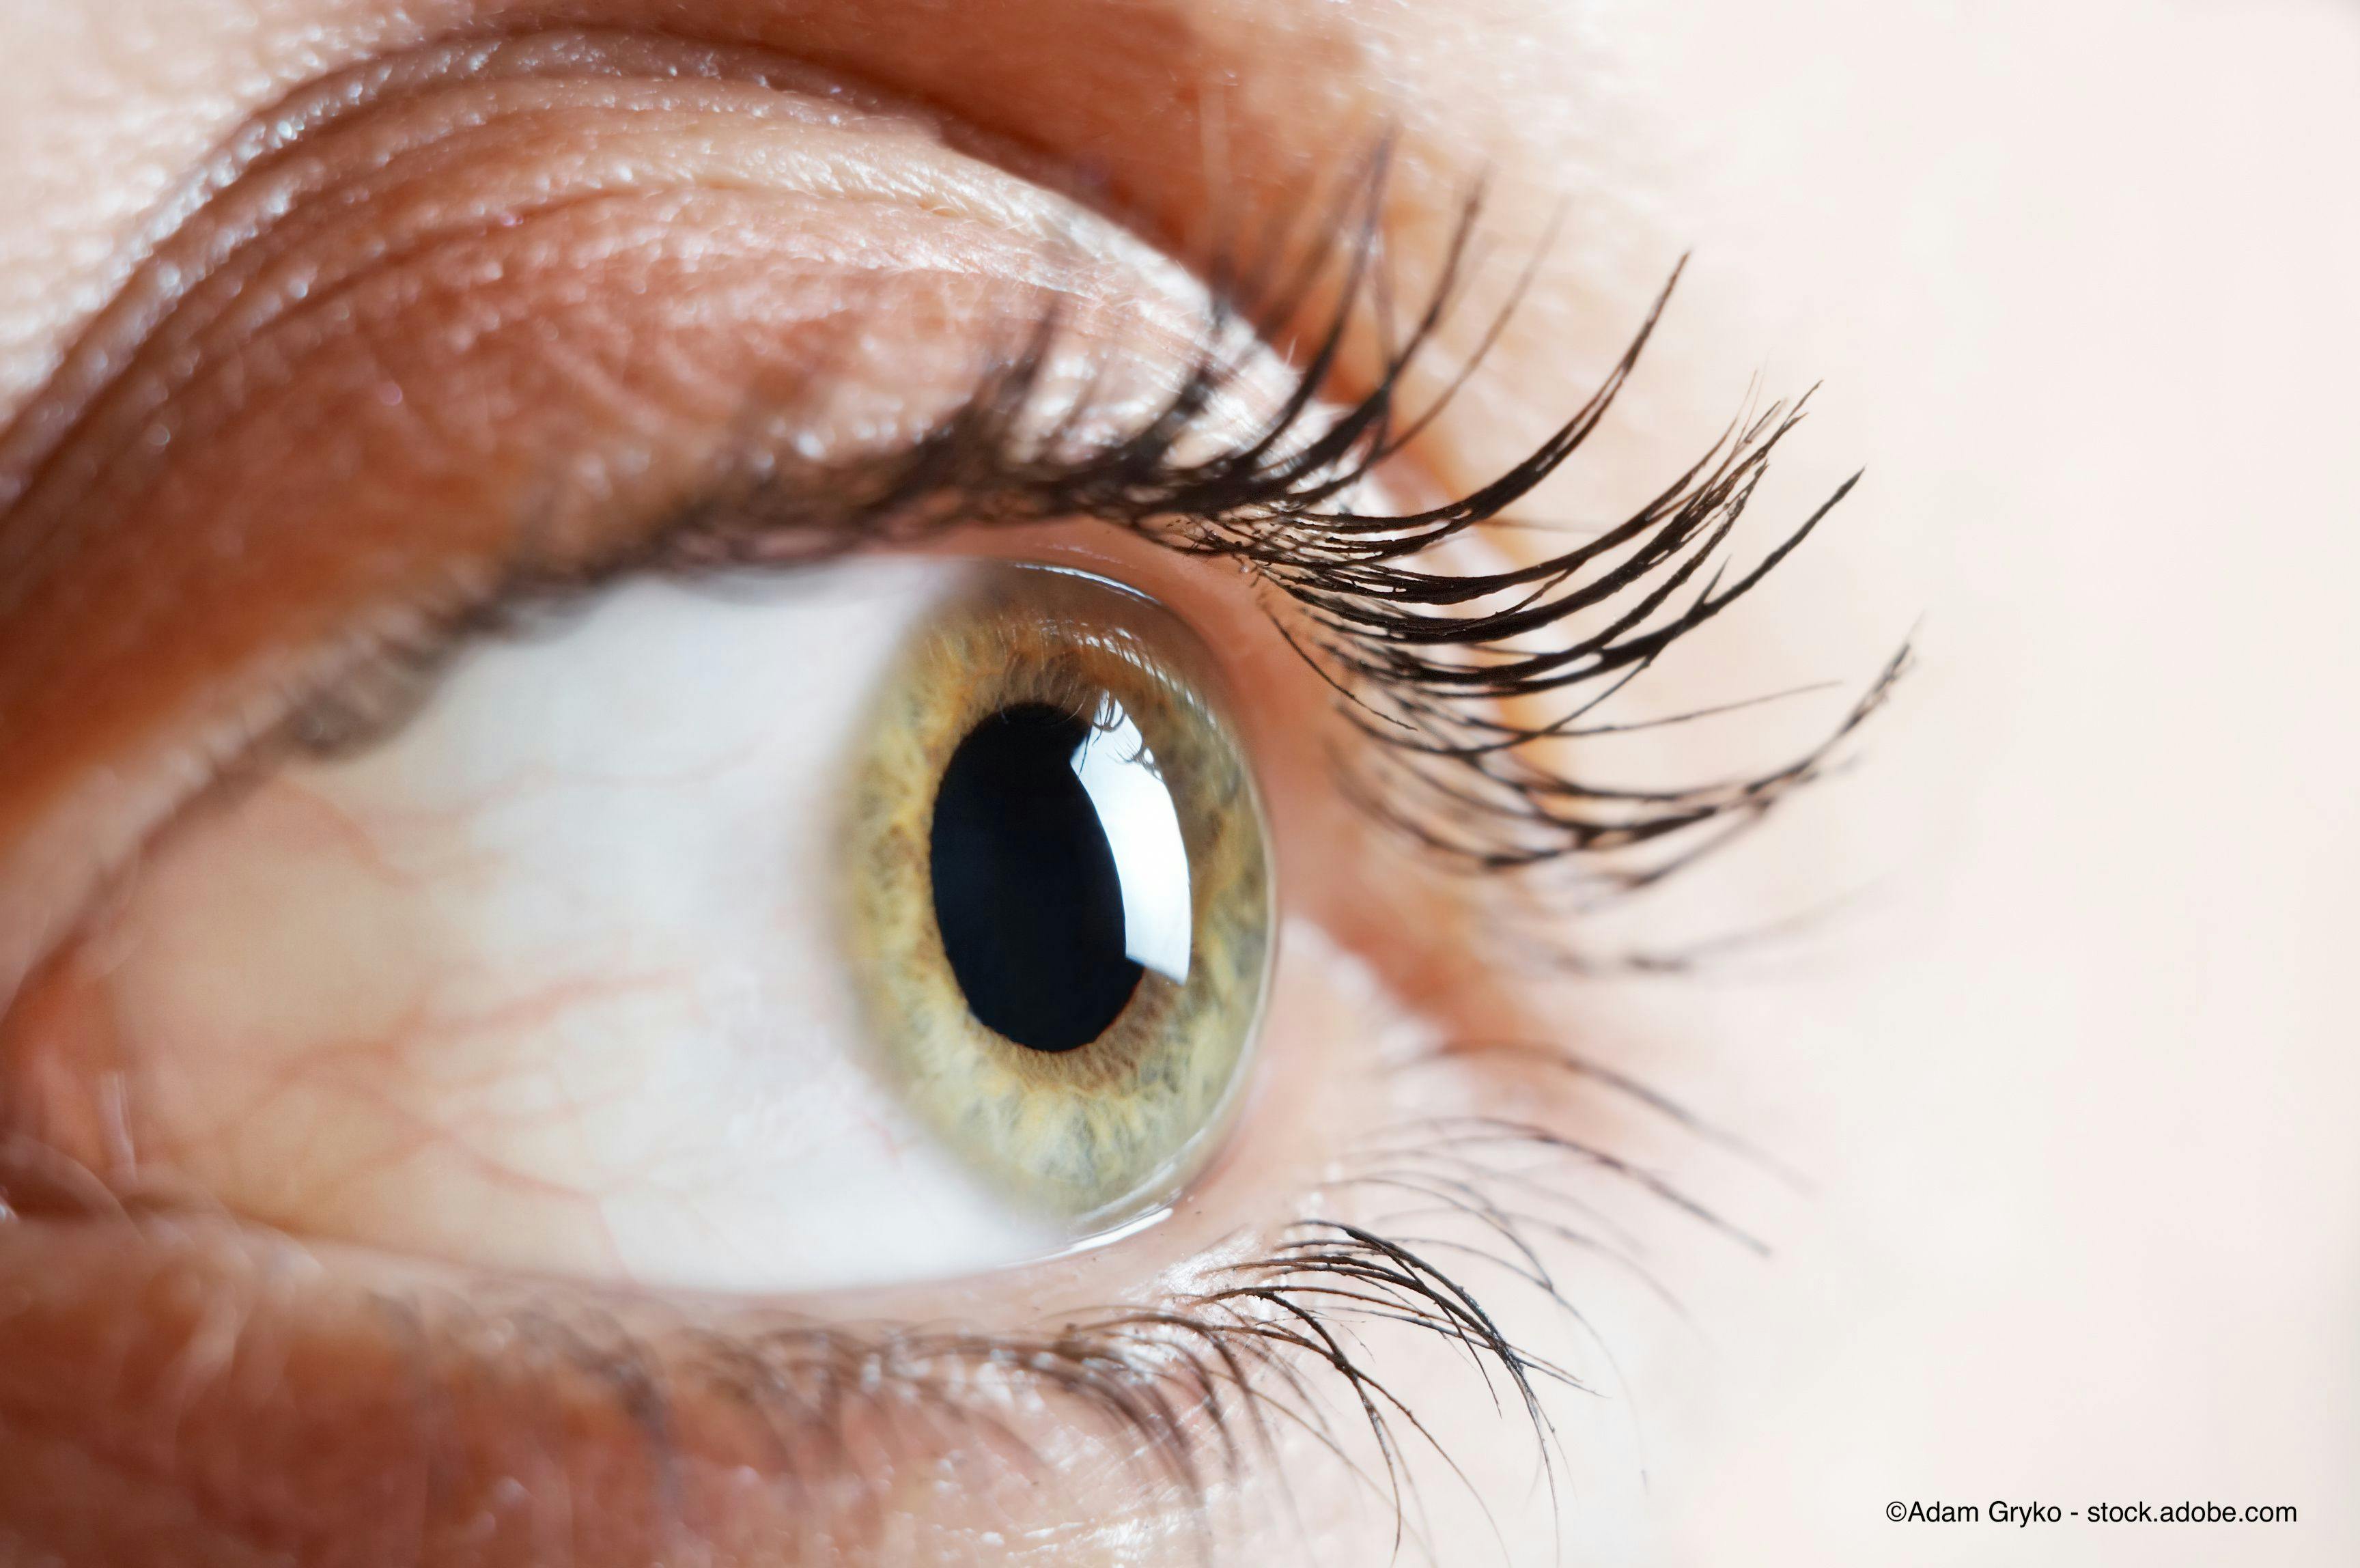 Bringing biologics to eye health